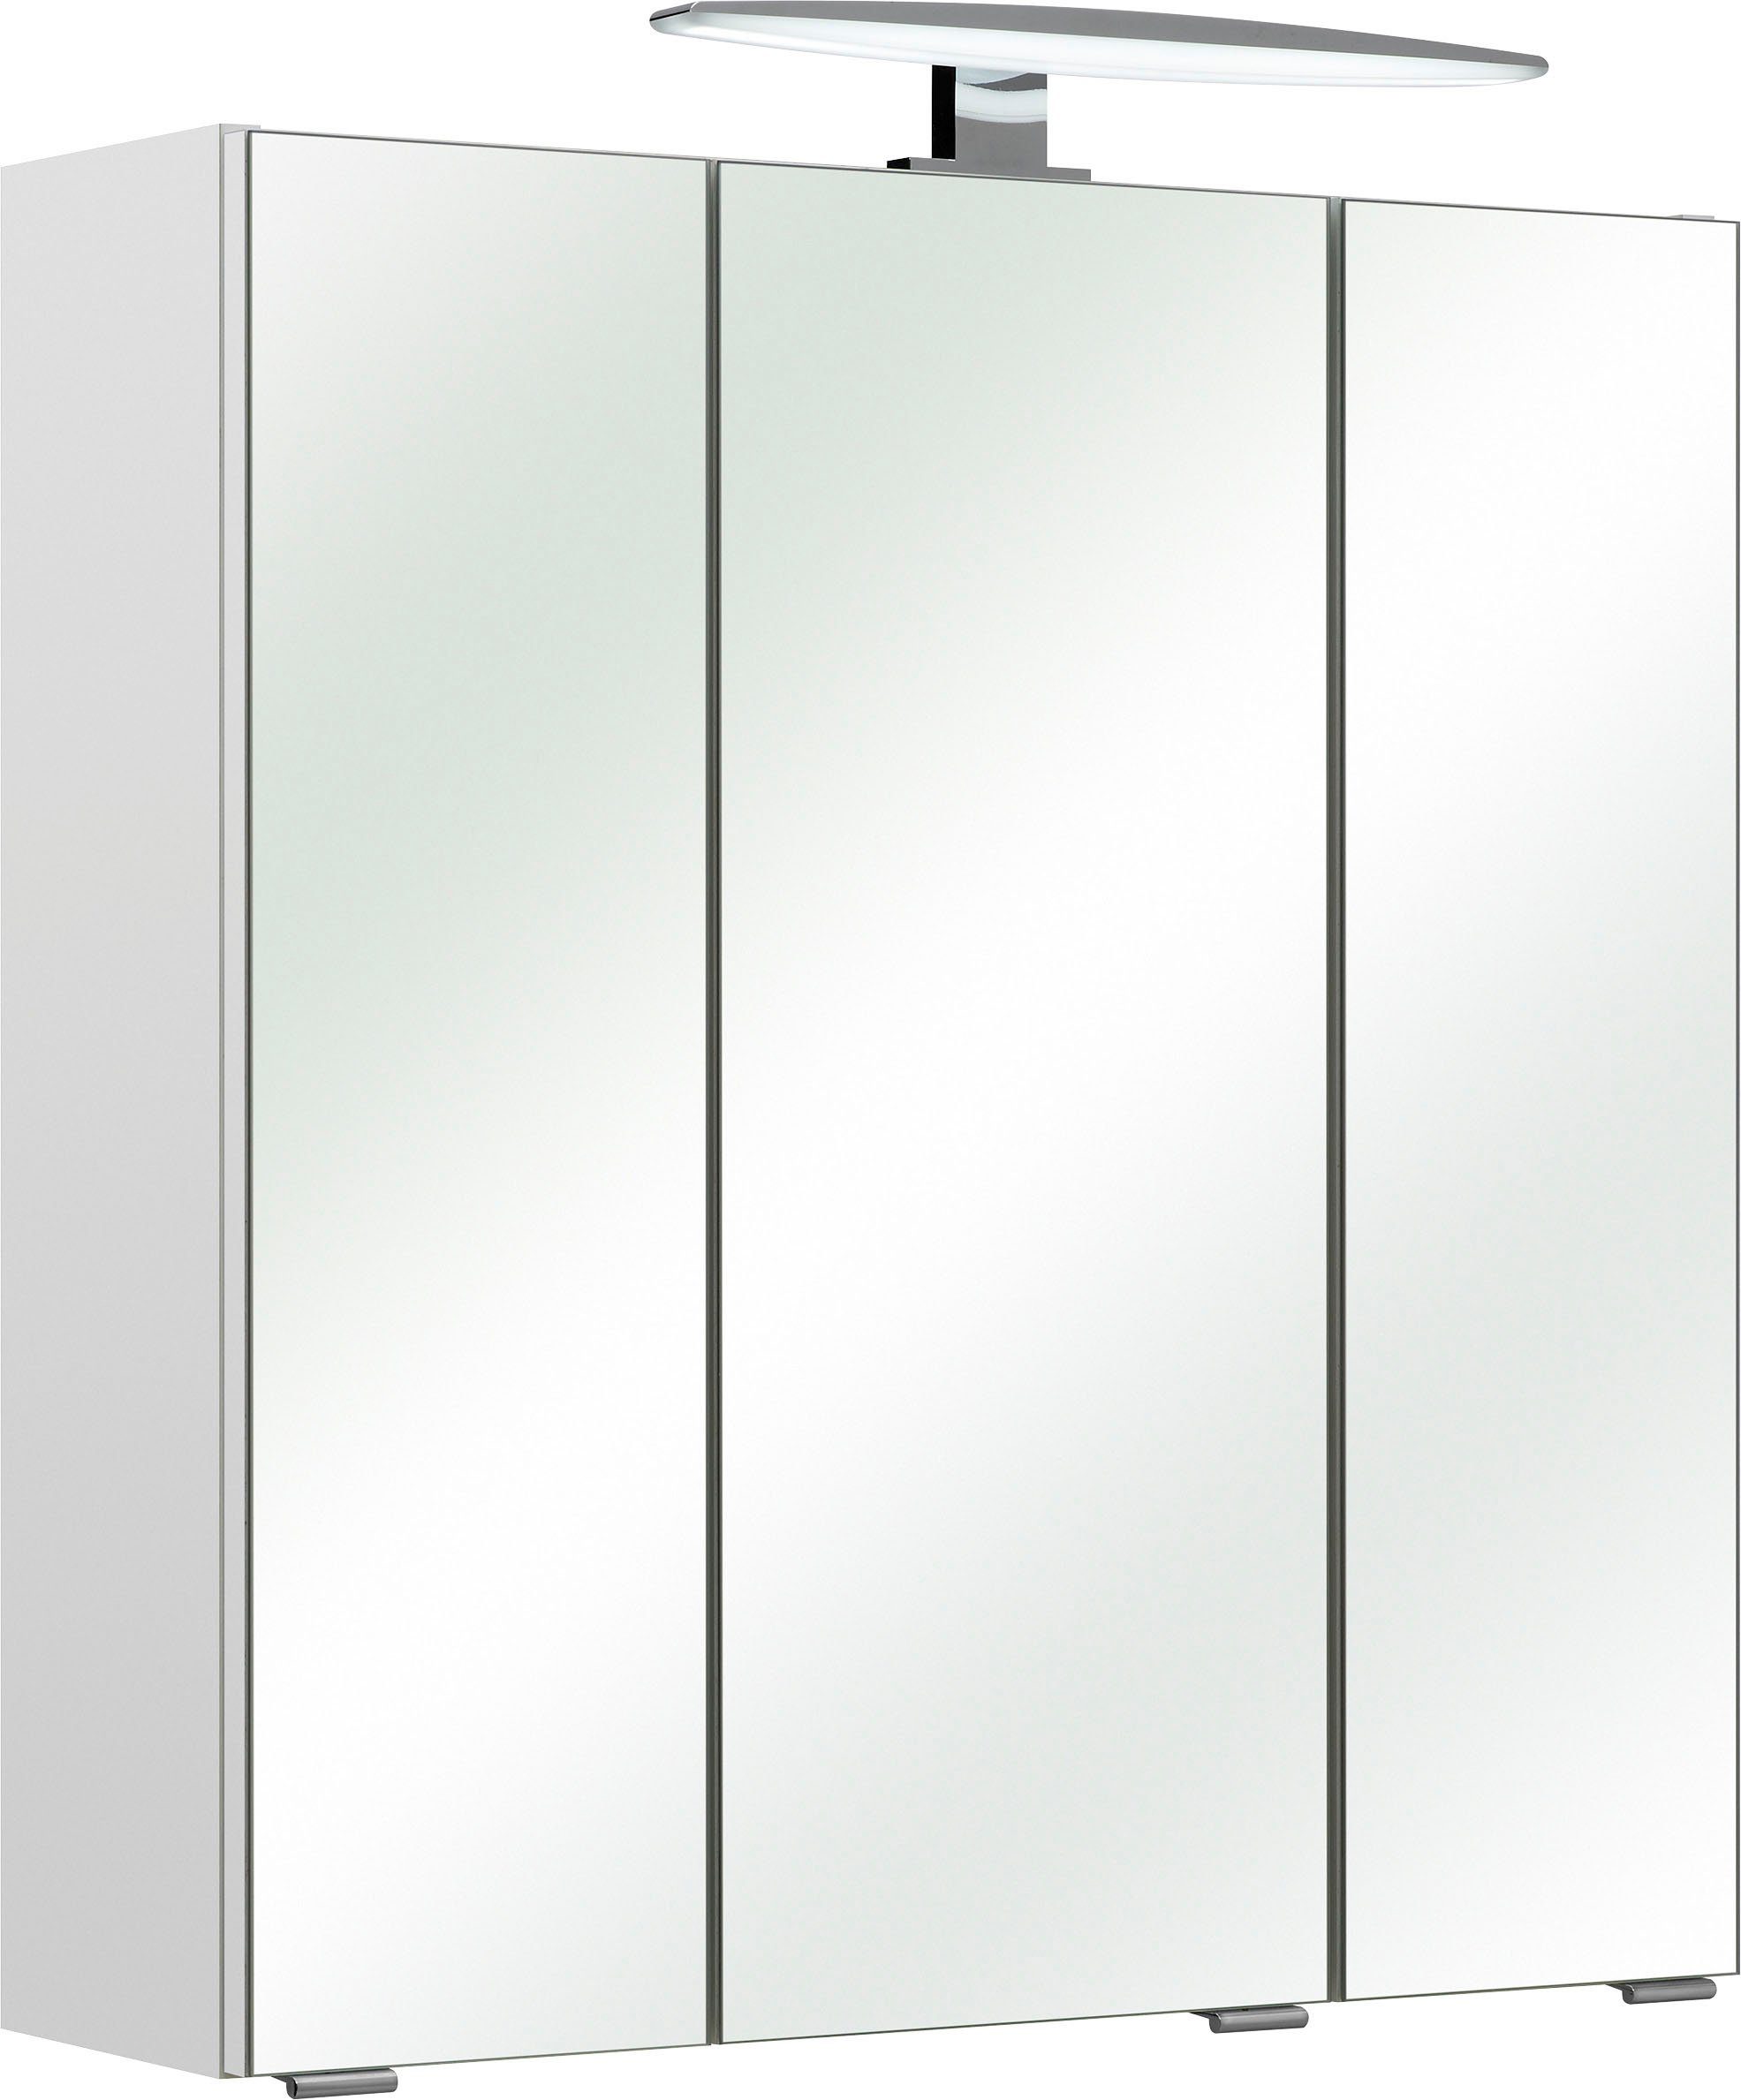 PELIPAL Spiegelschrank Breite LED-Beleuchtung, 953 3-türig, Quickset 65 cm, Schalter-/Steckdosenbox